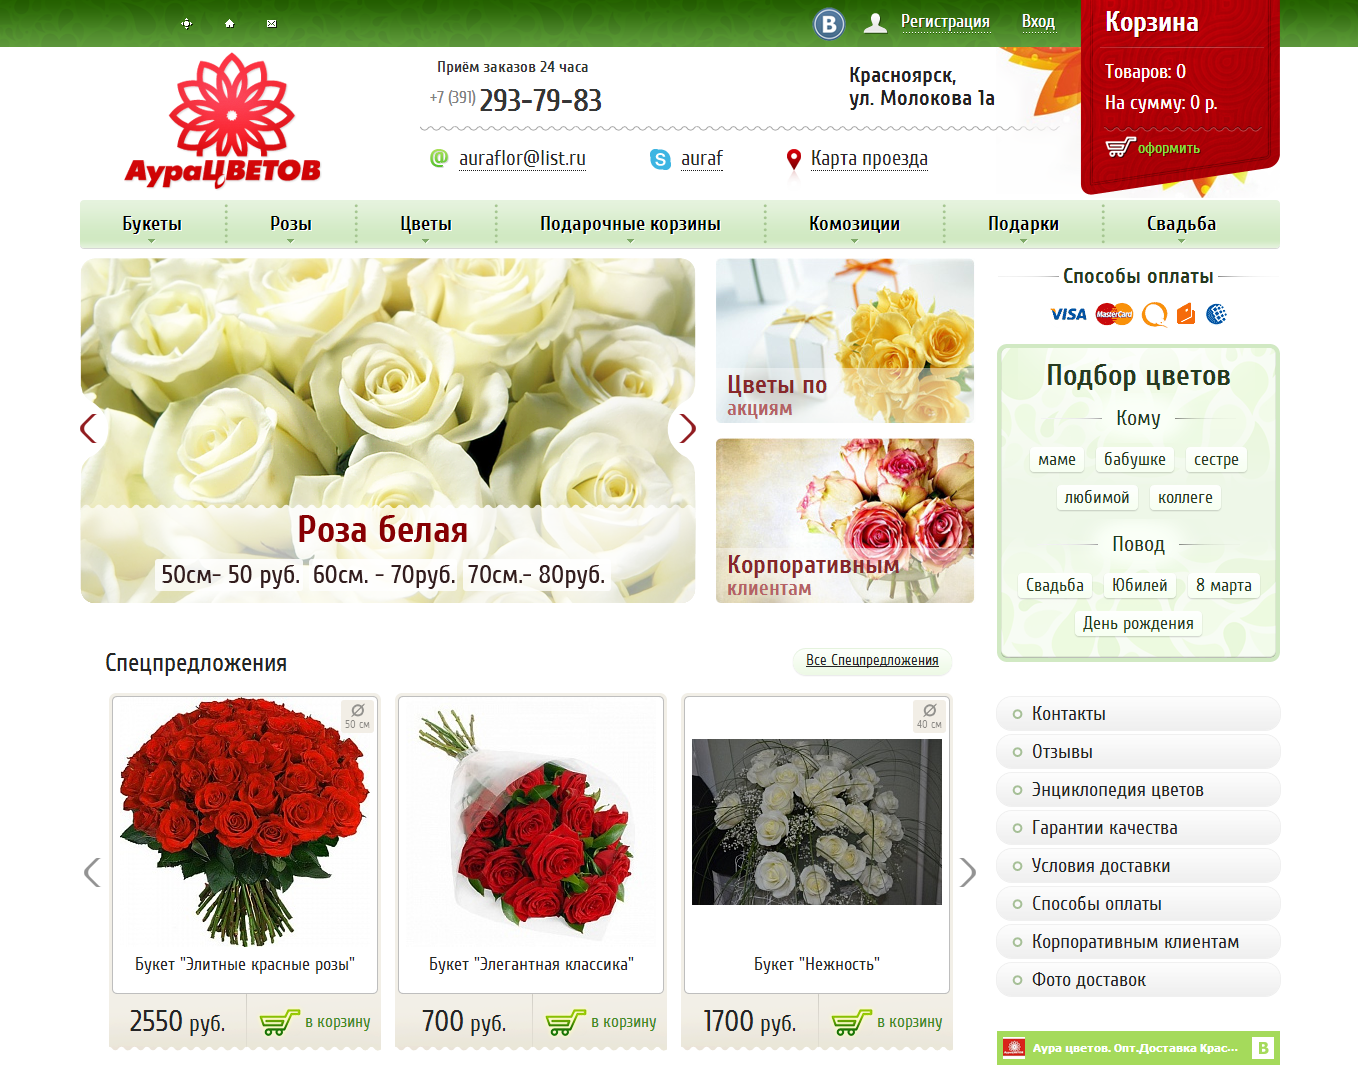 аурацветов - интернет магазин цветов